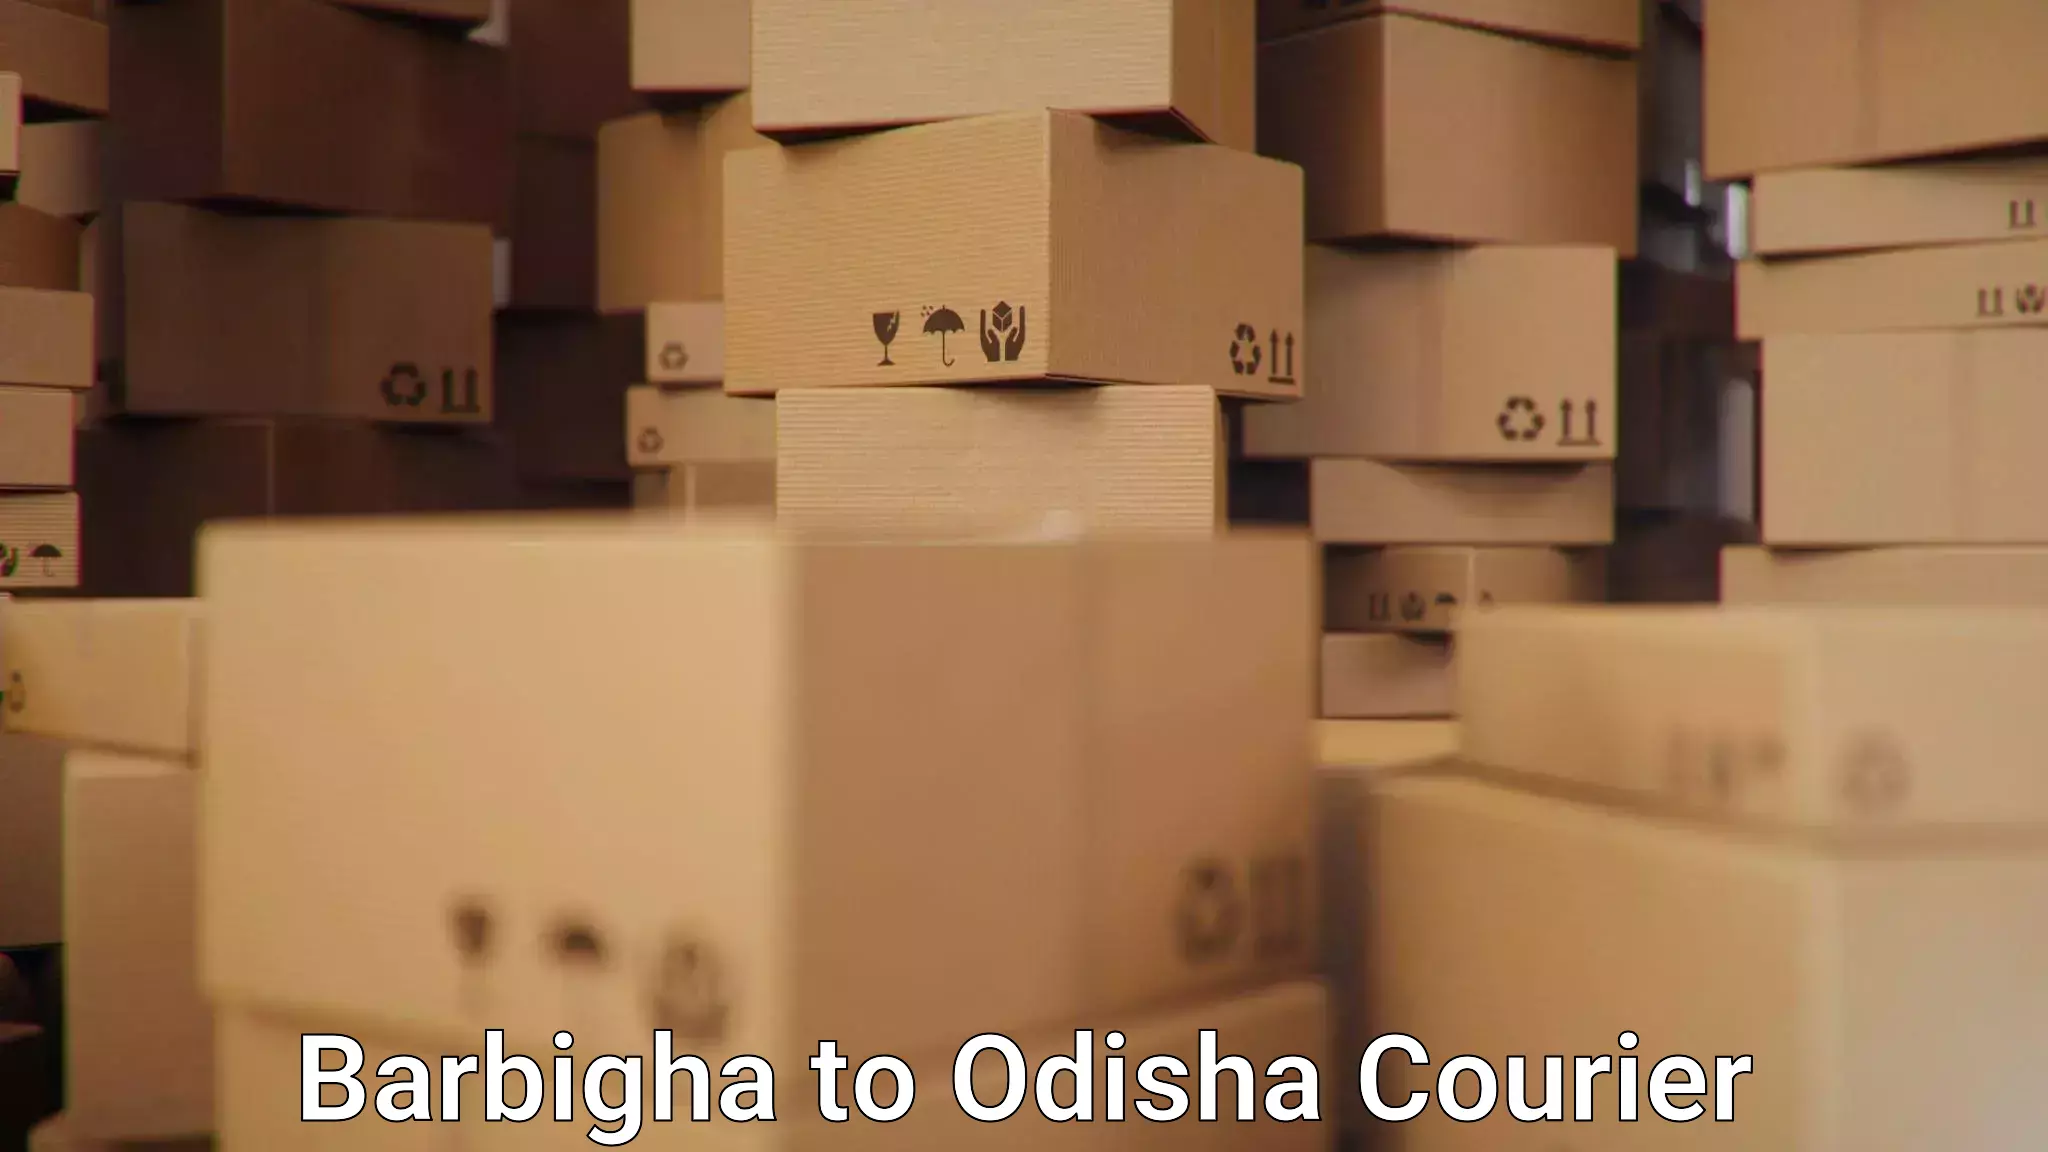 Courier service innovation Barbigha to Ukhunda